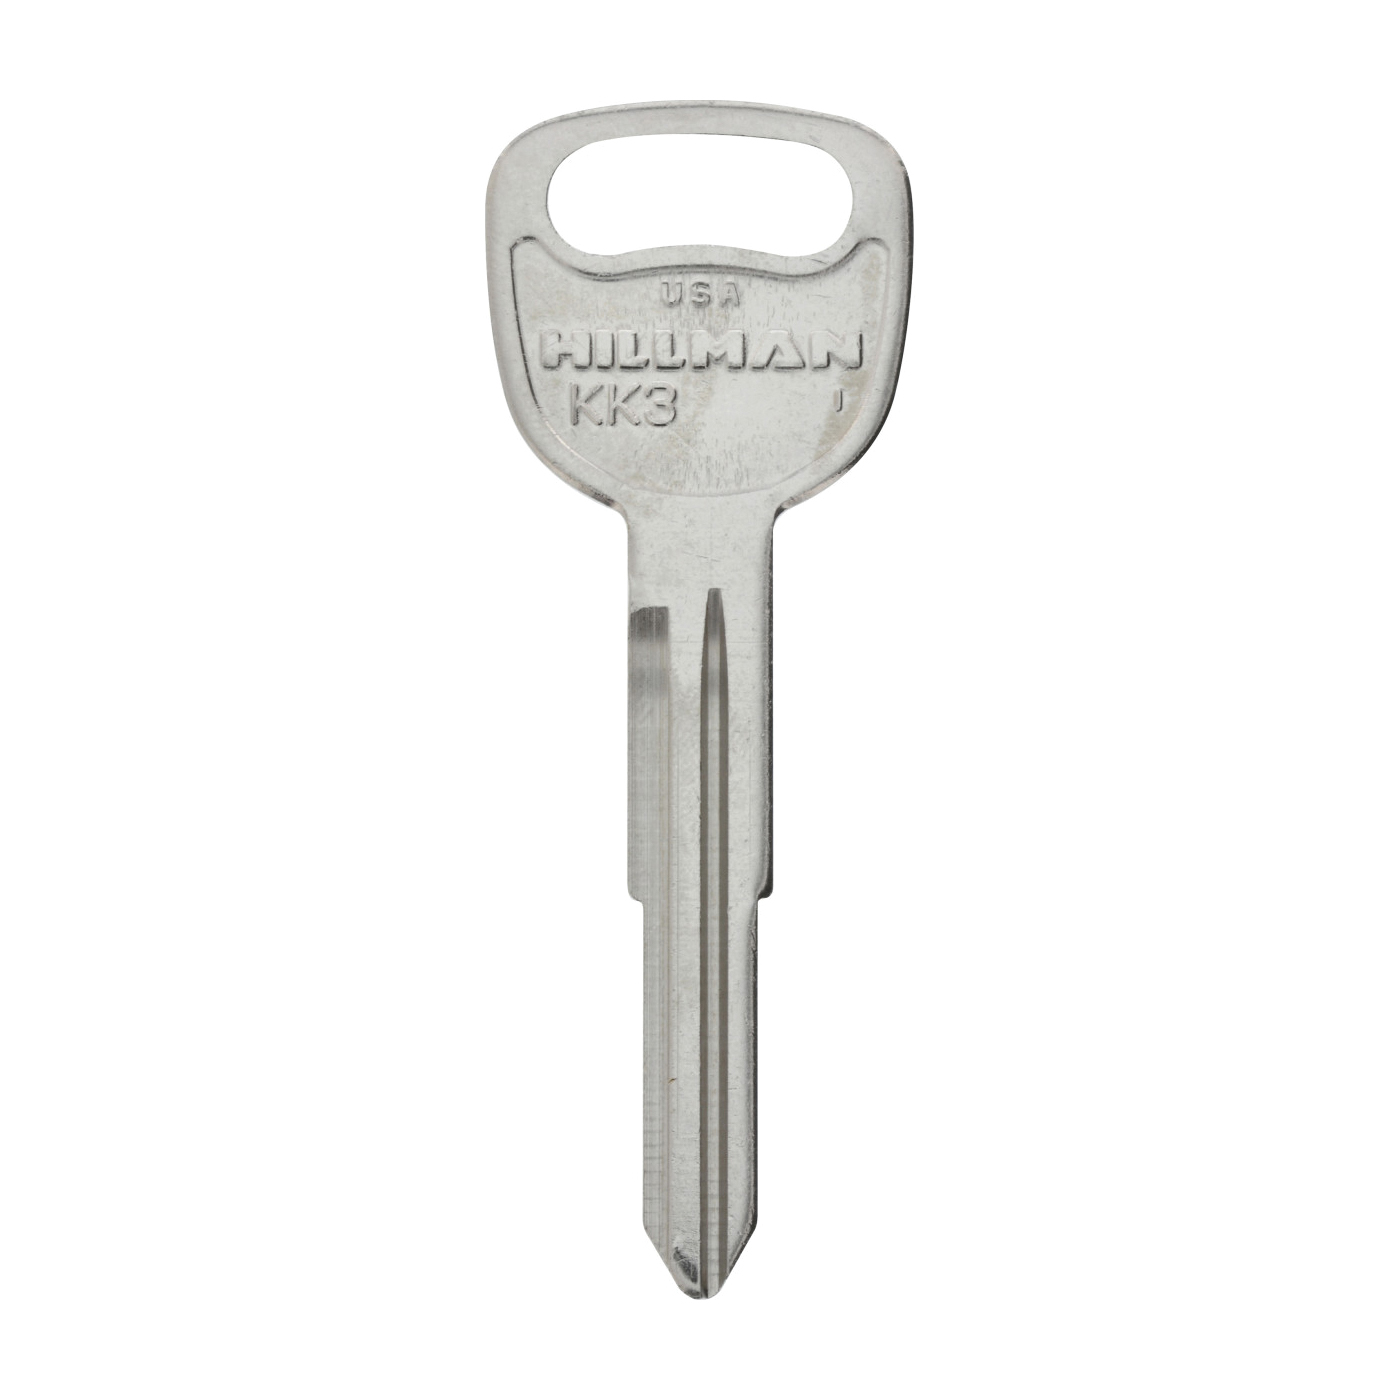 Hillman 441500 Key, For: Kia Locks